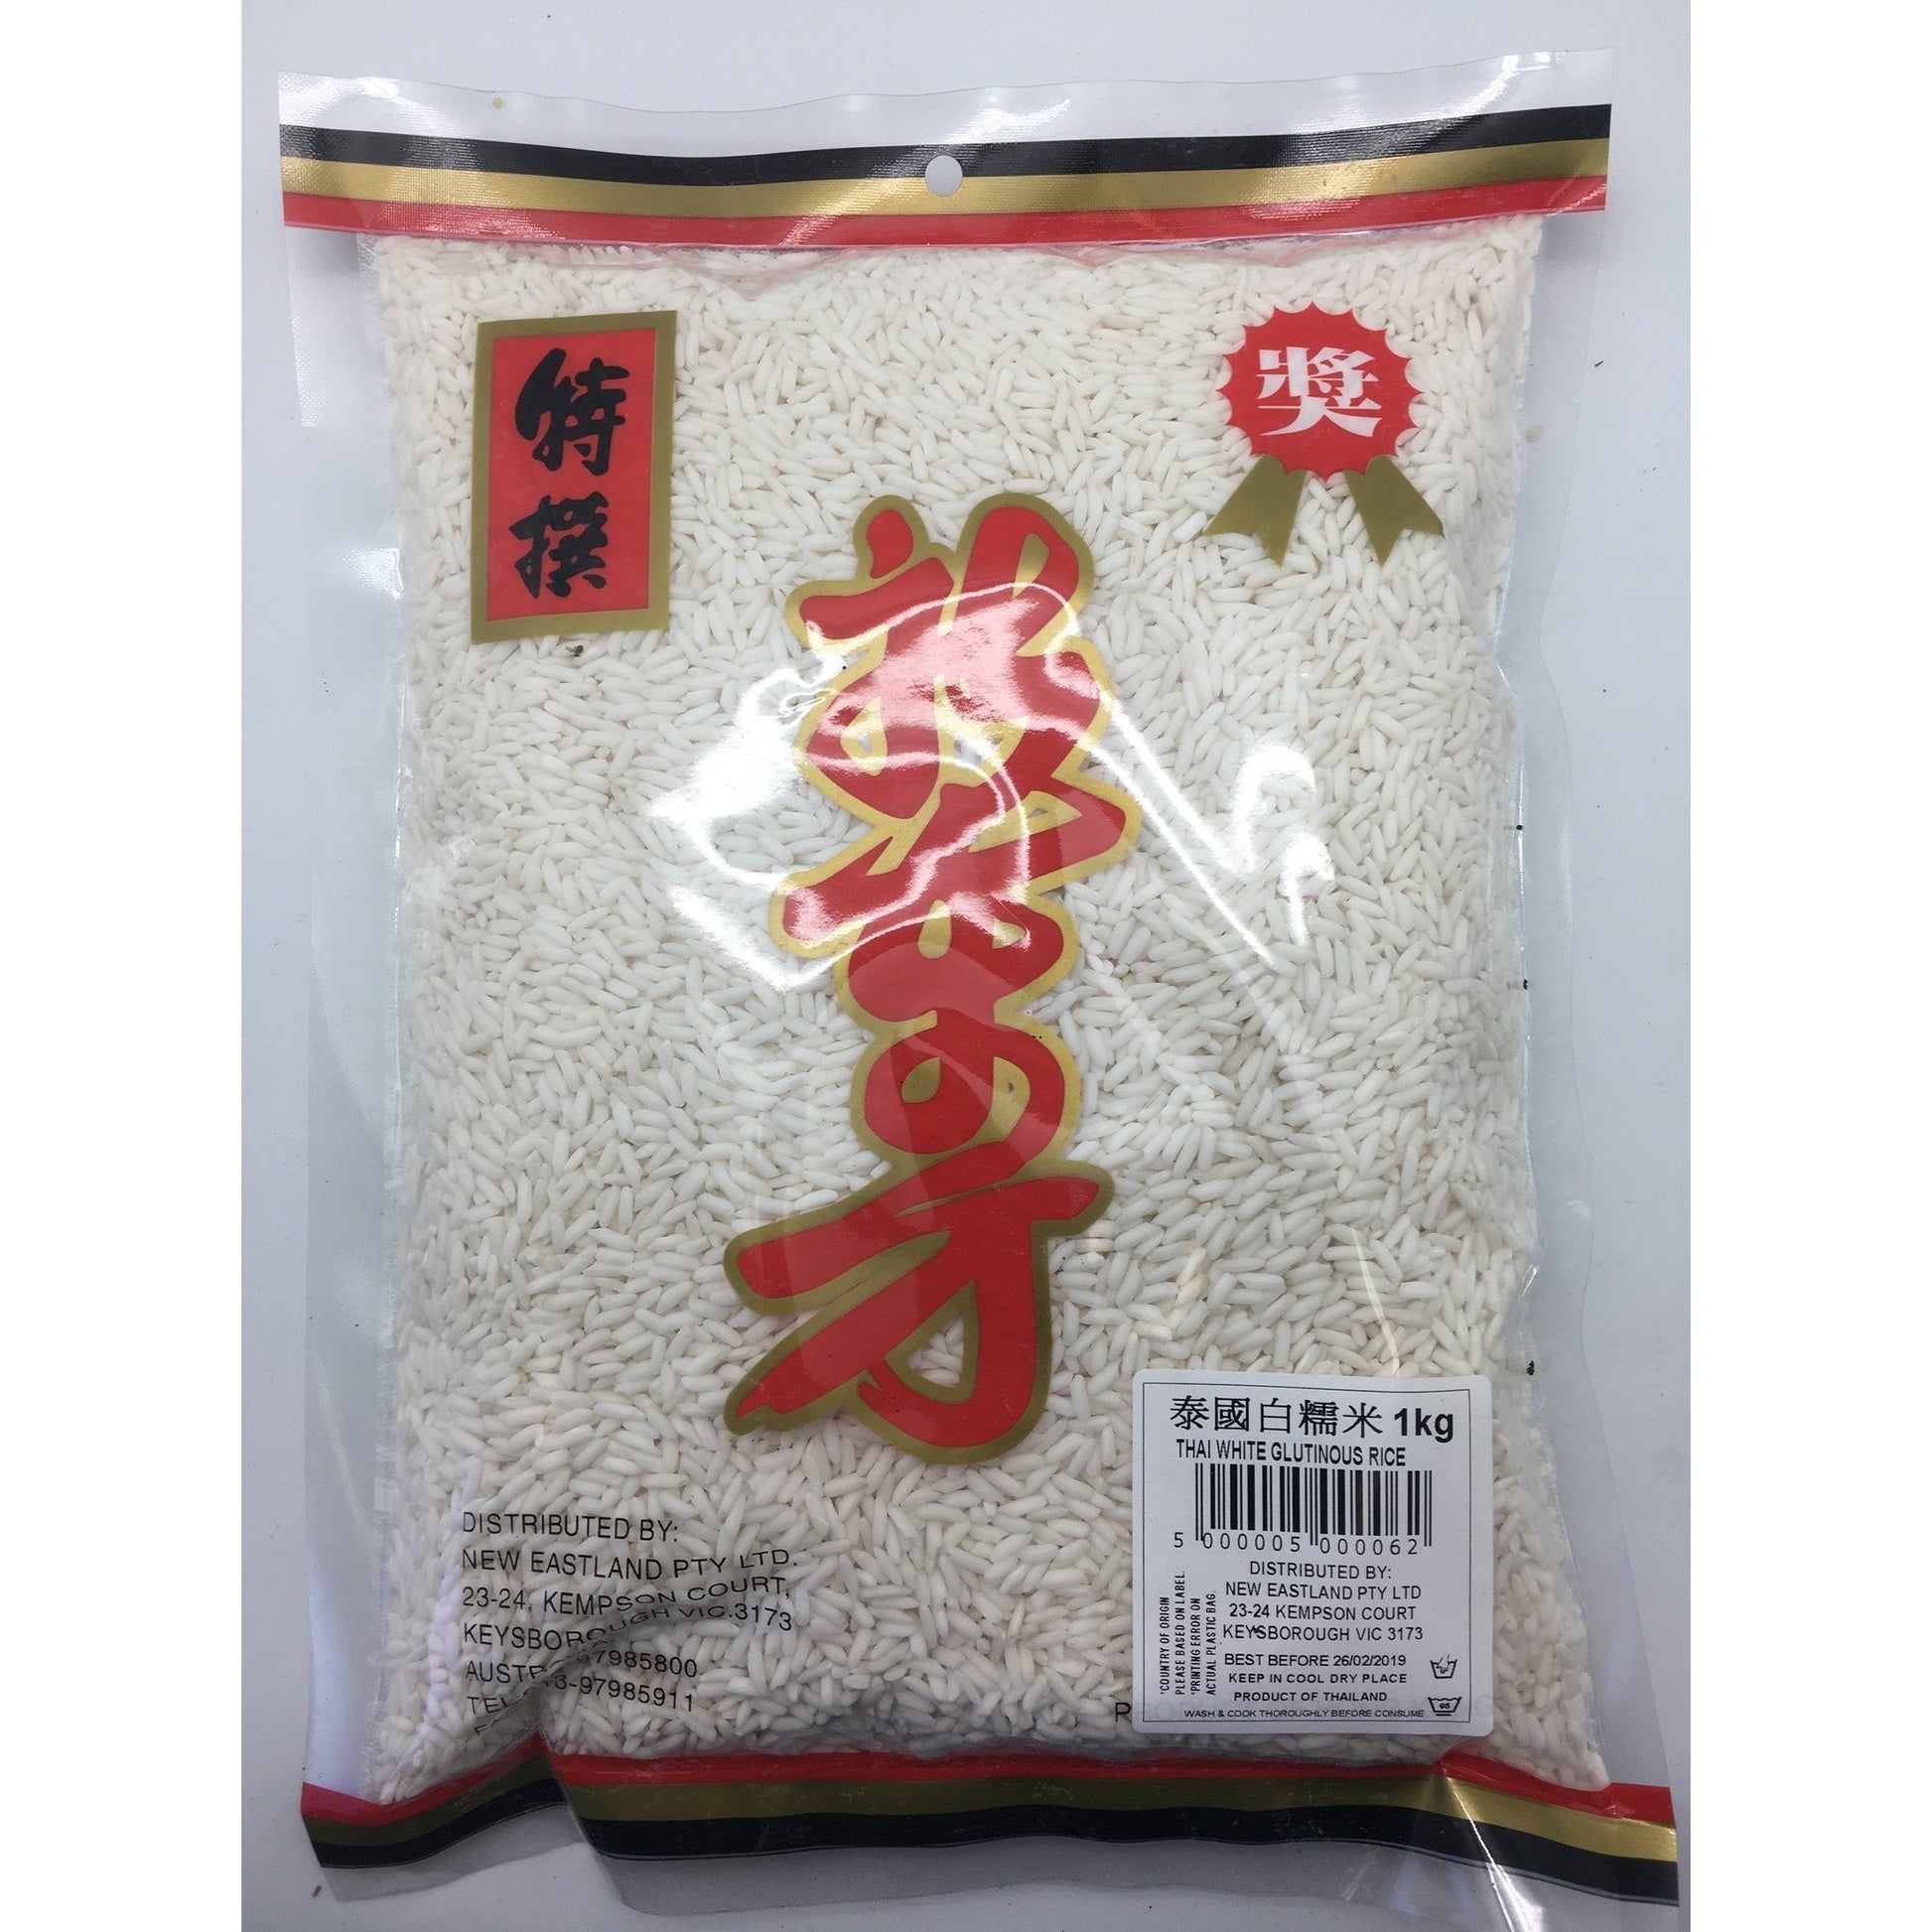 R006XS New Eastland Pty Ltd- Thai White Glutinous Rice 1kg - 25 bags / 1 CTN - New Eastland Pty Ltd - Asian food wholesalers